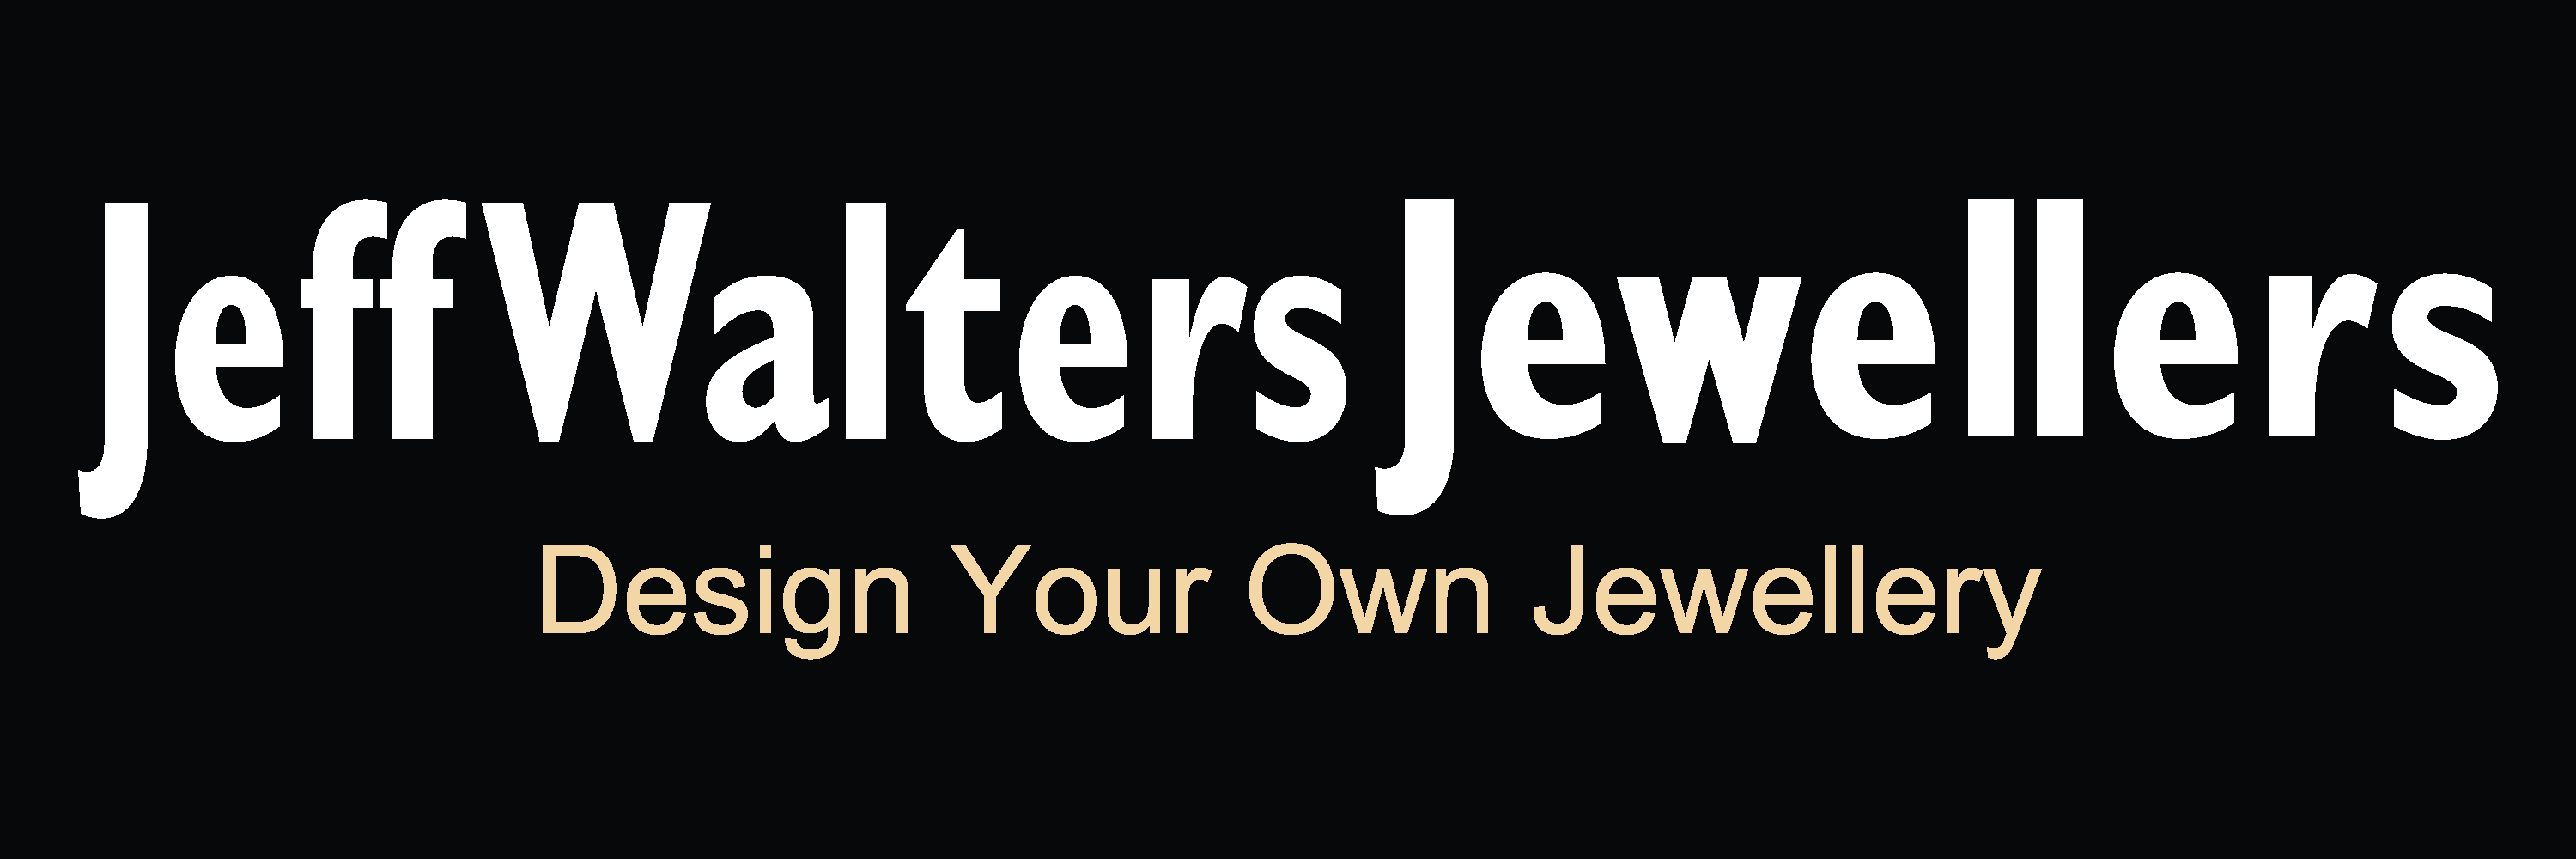 Jeff Walters Jewellers logo